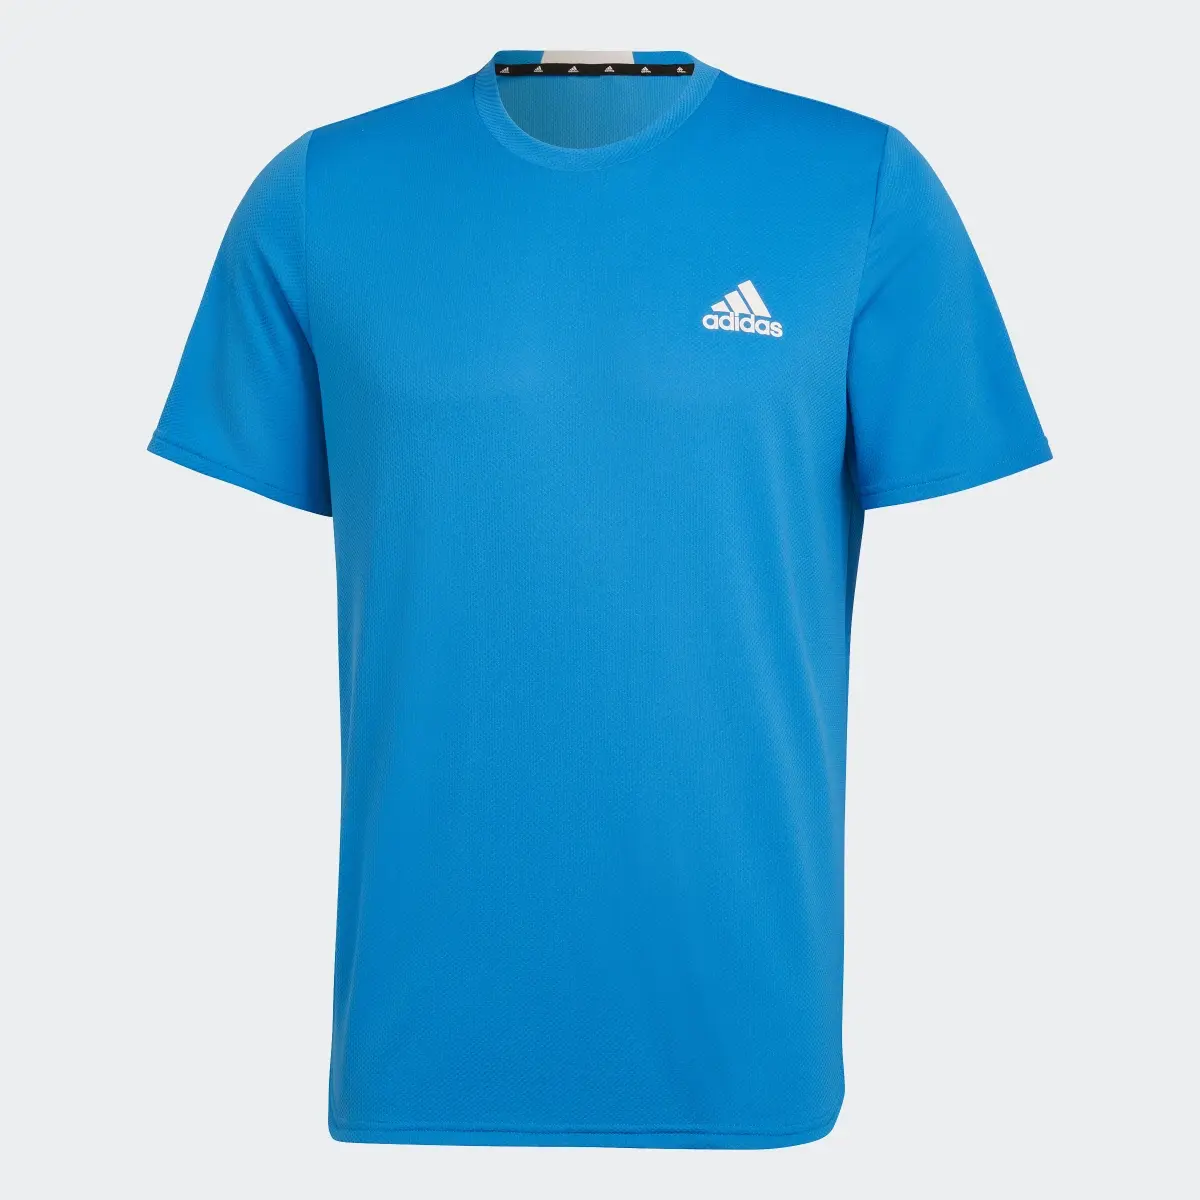 Adidas AEROREADY Designed for Movement T-Shirt. 1